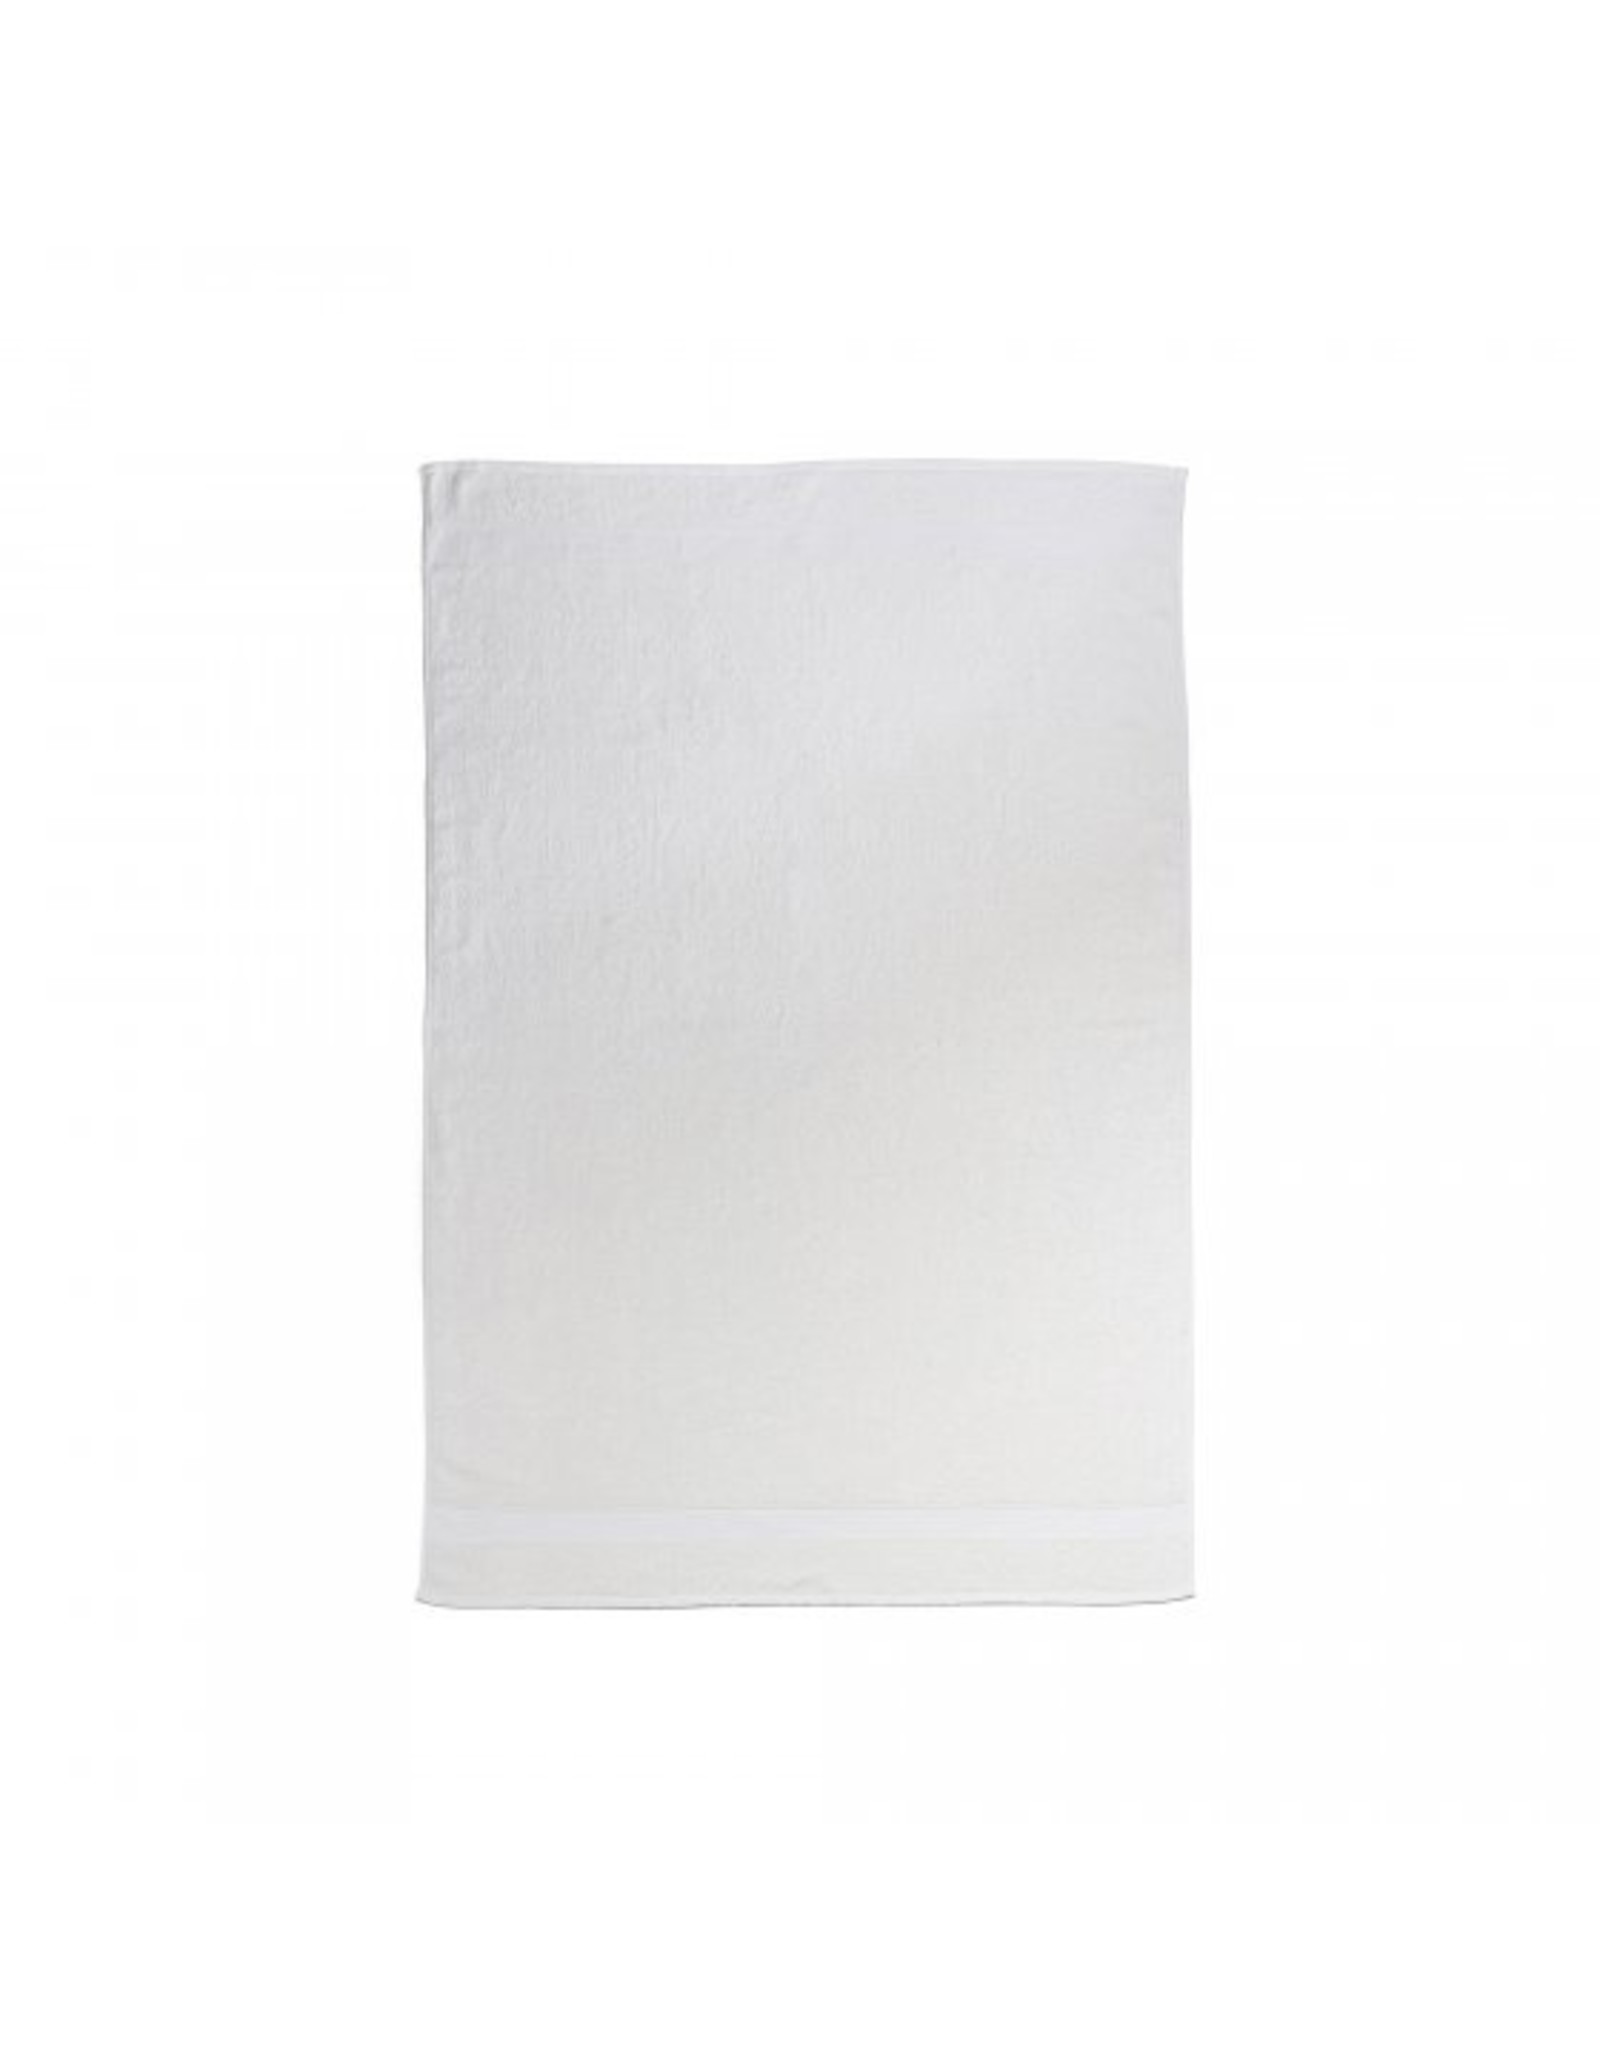 Simi Optic White Bath Sheet 39 x 59